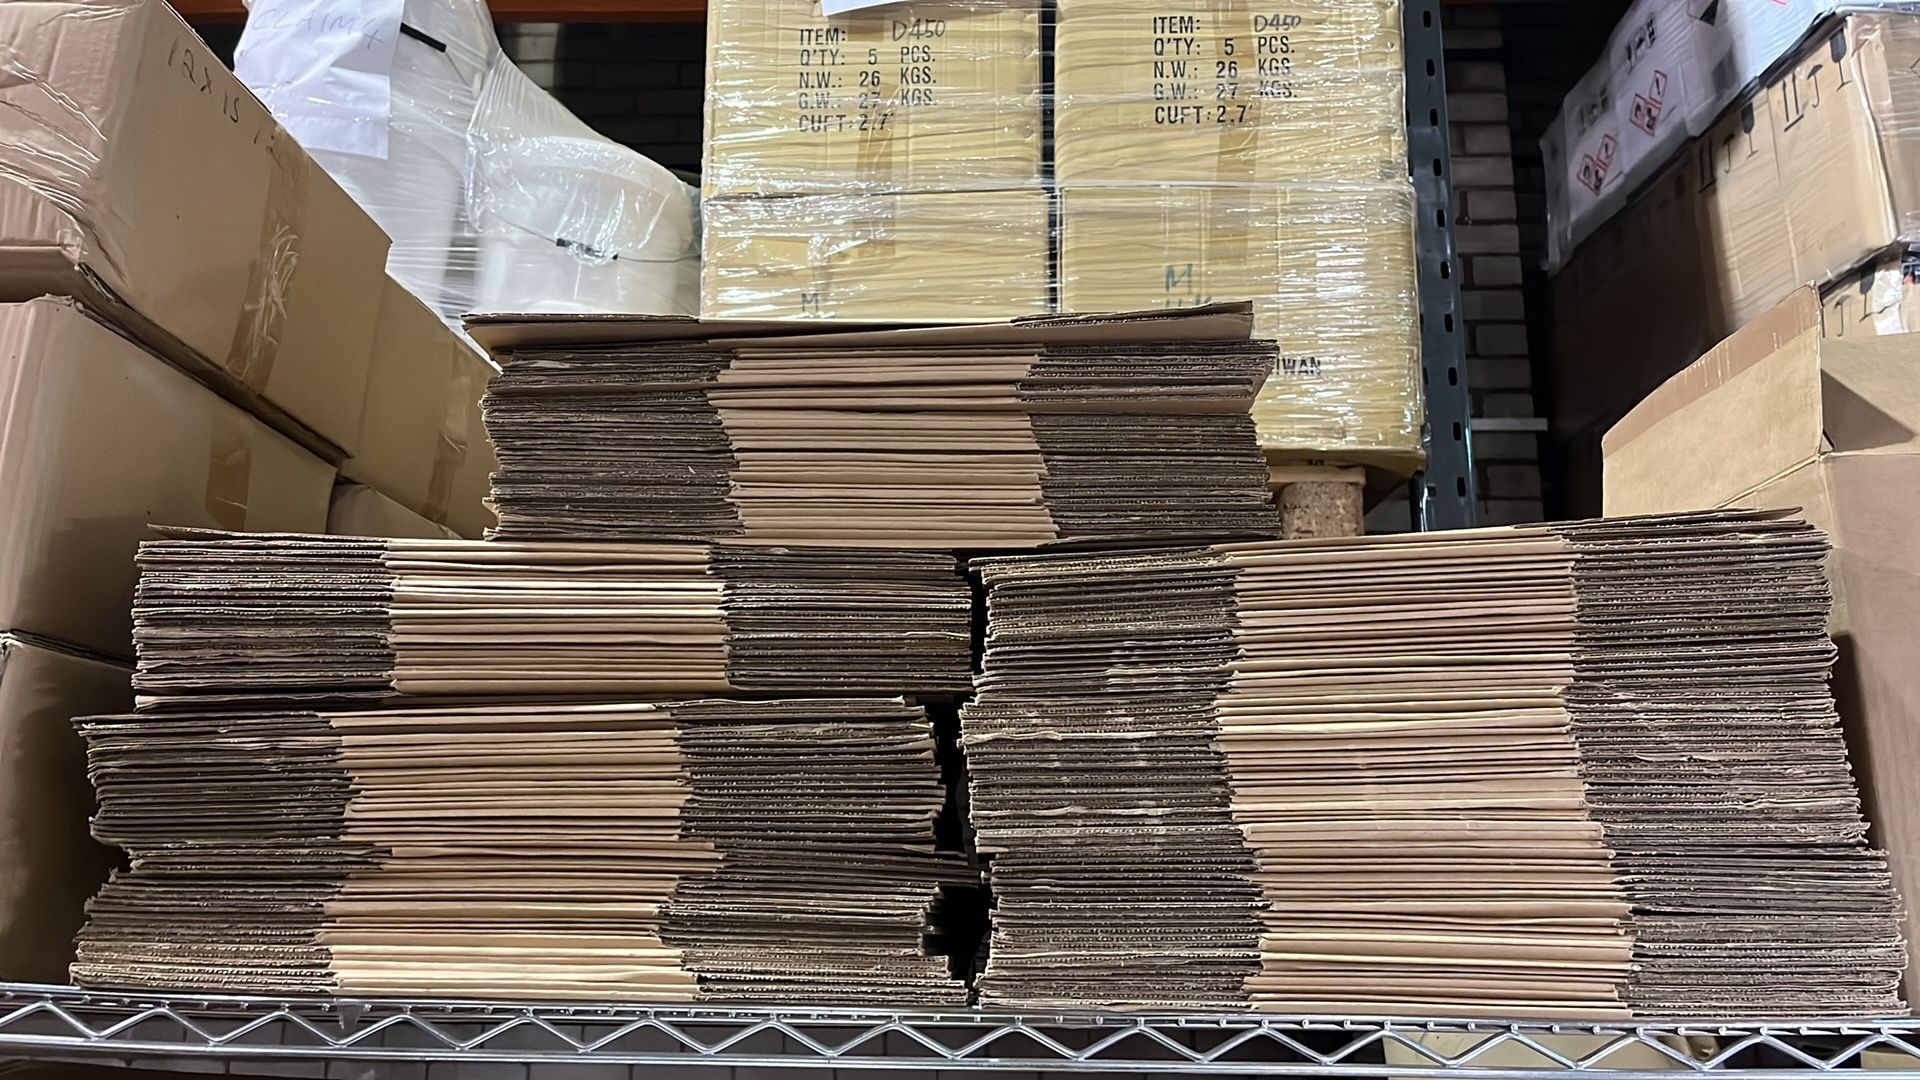 80 x Single Wall Cardboard Boxes - Image 3 of 3